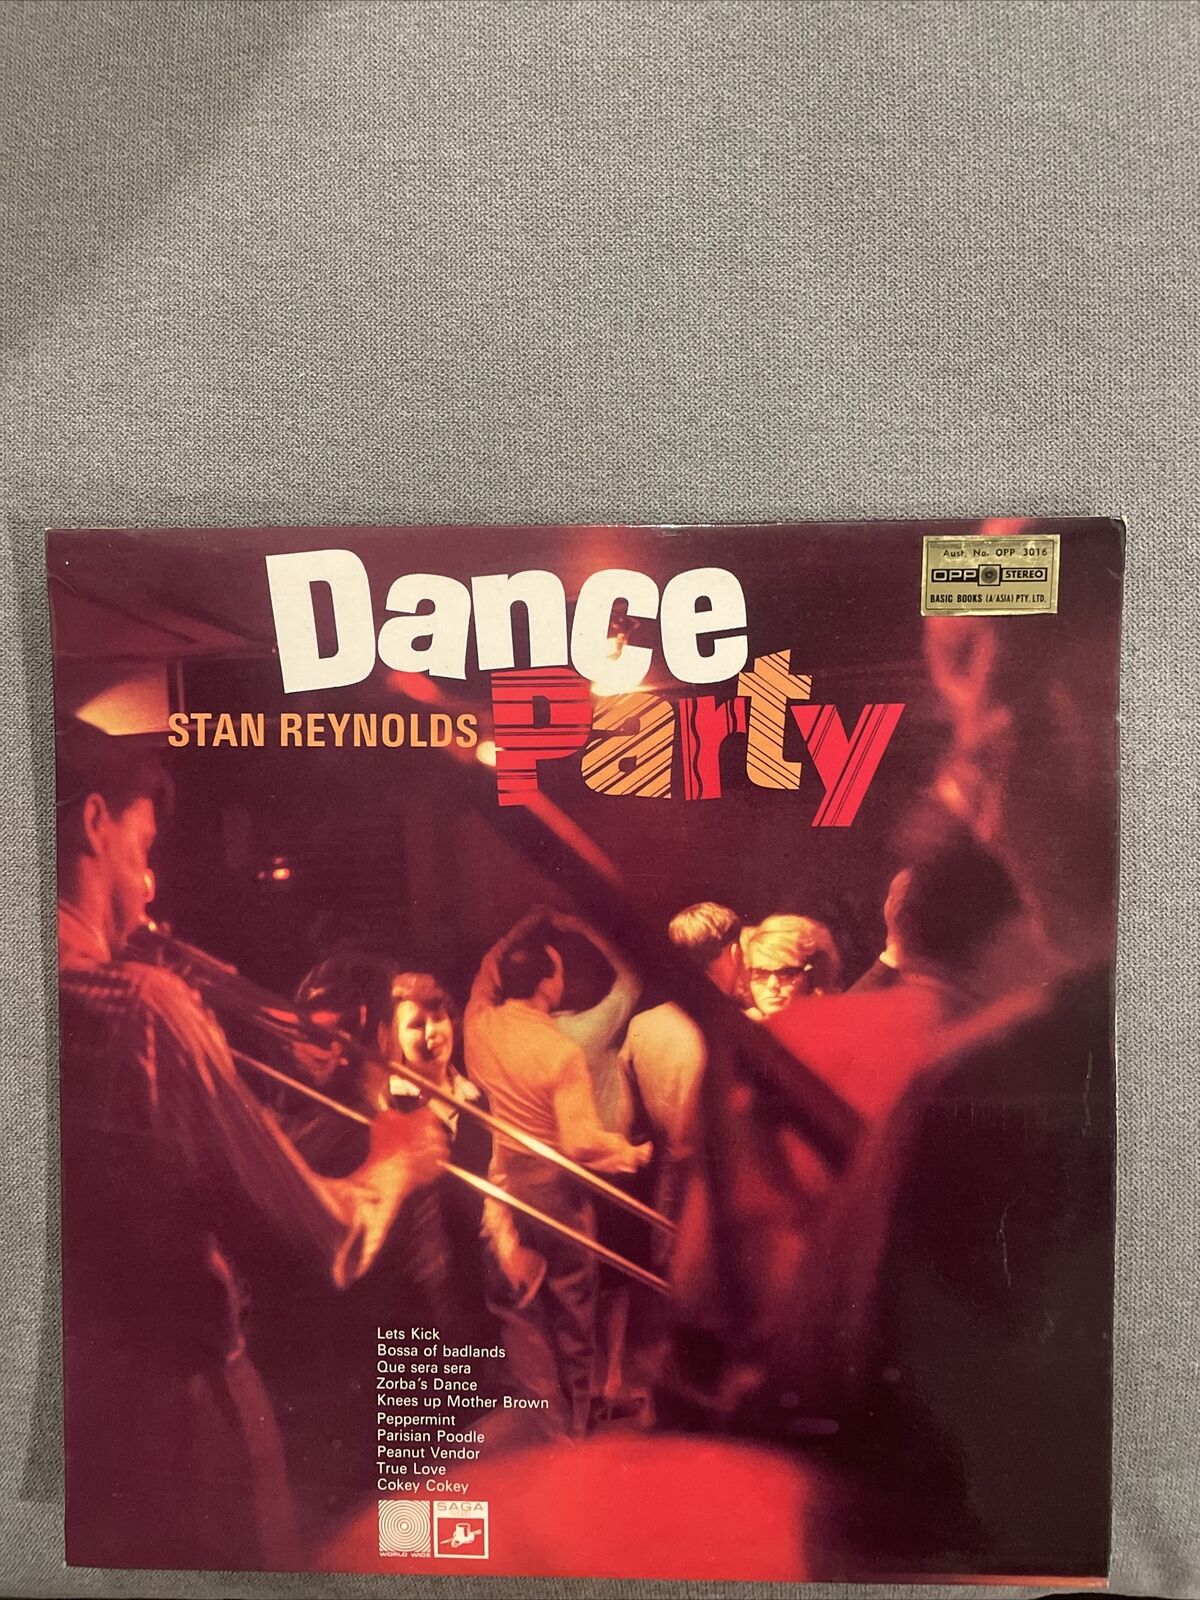 VINYL STAN REYNOLDS Dance Party LP ALBUM 12 RECORD